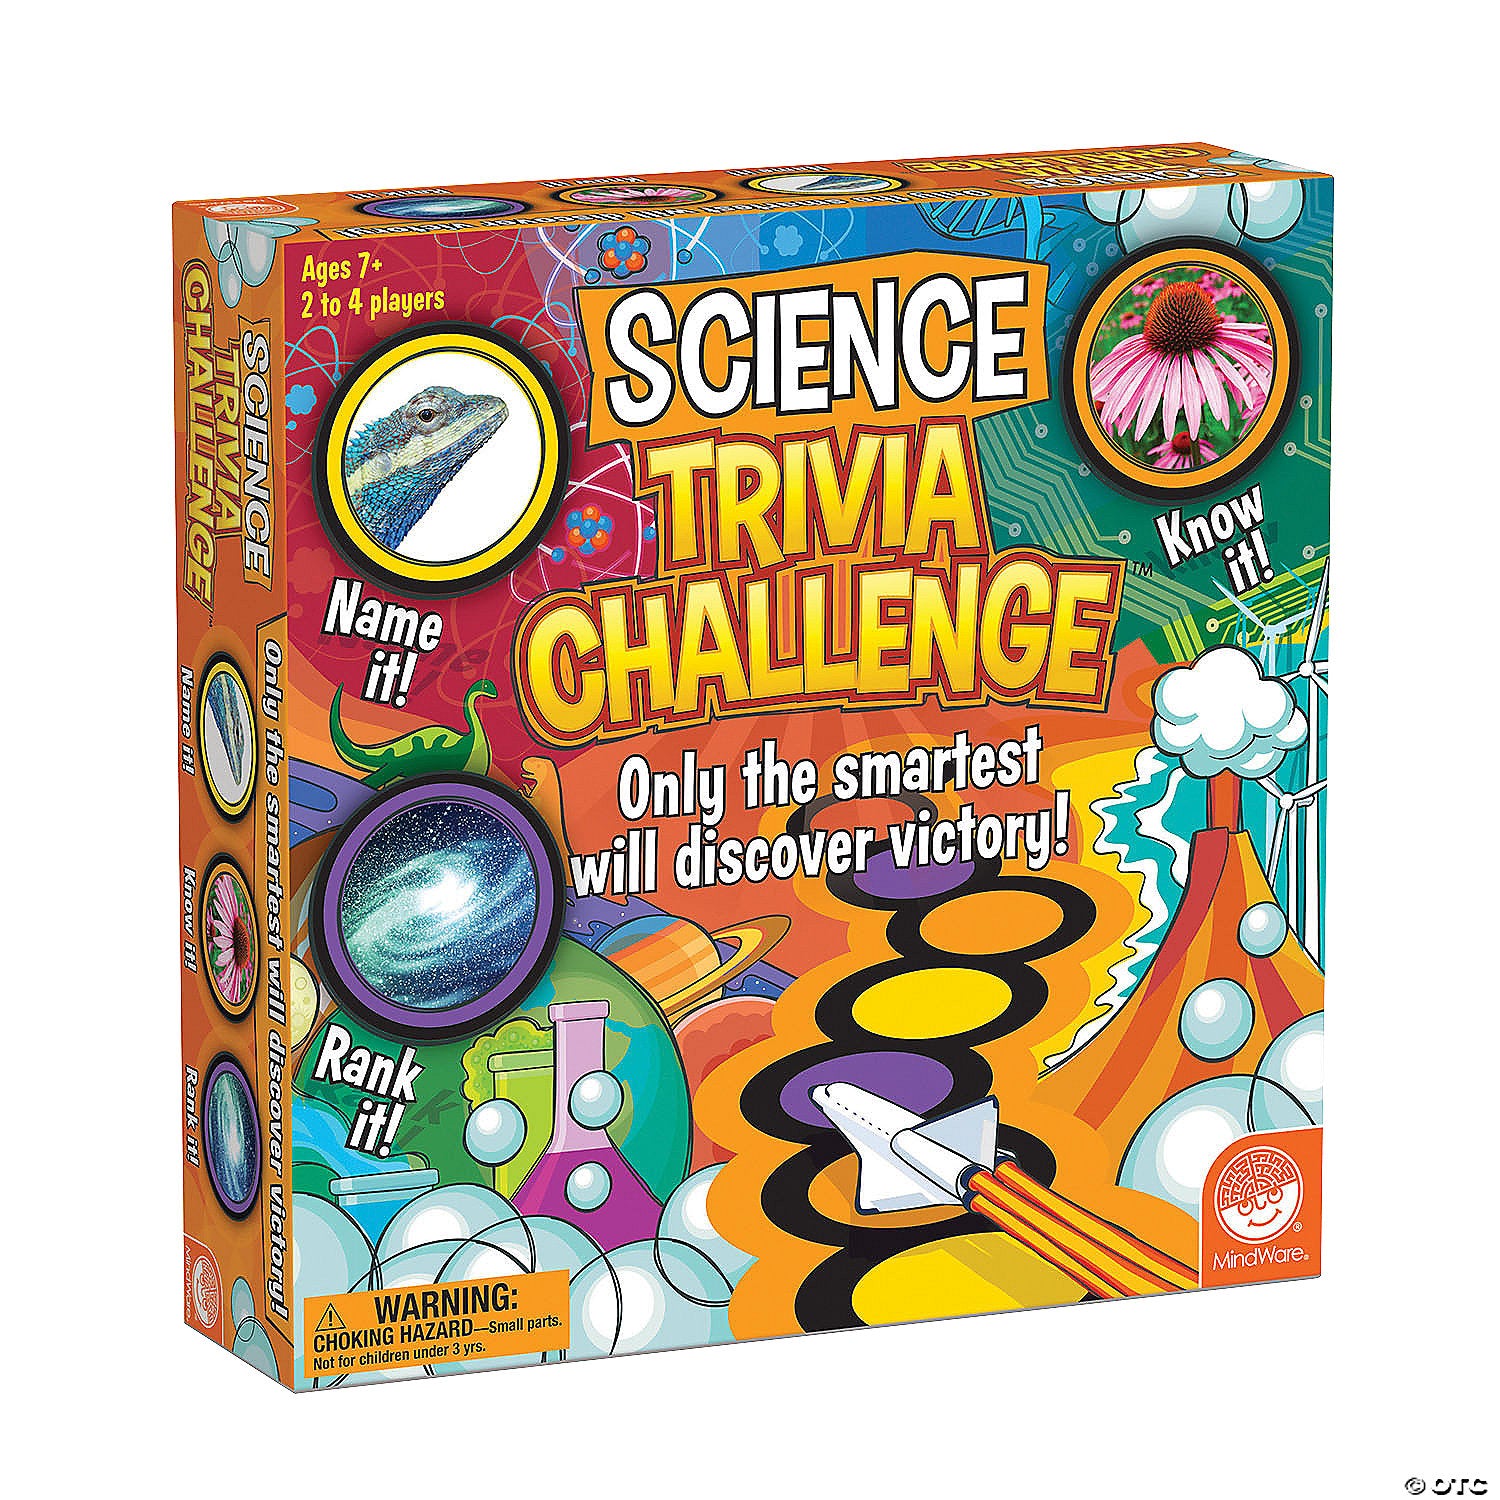 SCIENCE TRIVIA CHALLENGE